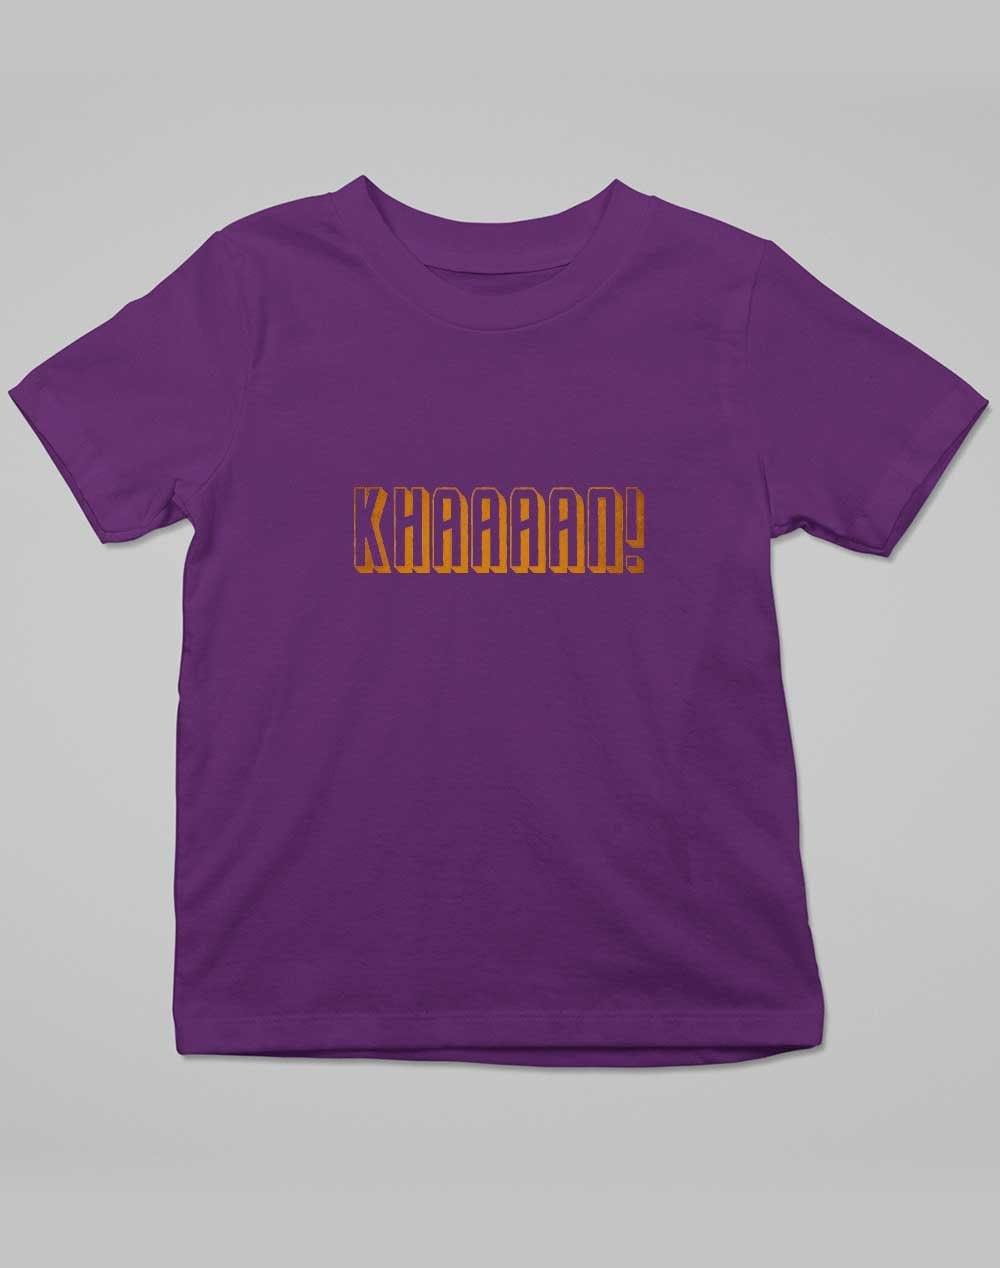 KHAAAAAN Kids T-Shirt 3-4 years / Dark Purple  - Off World Tees